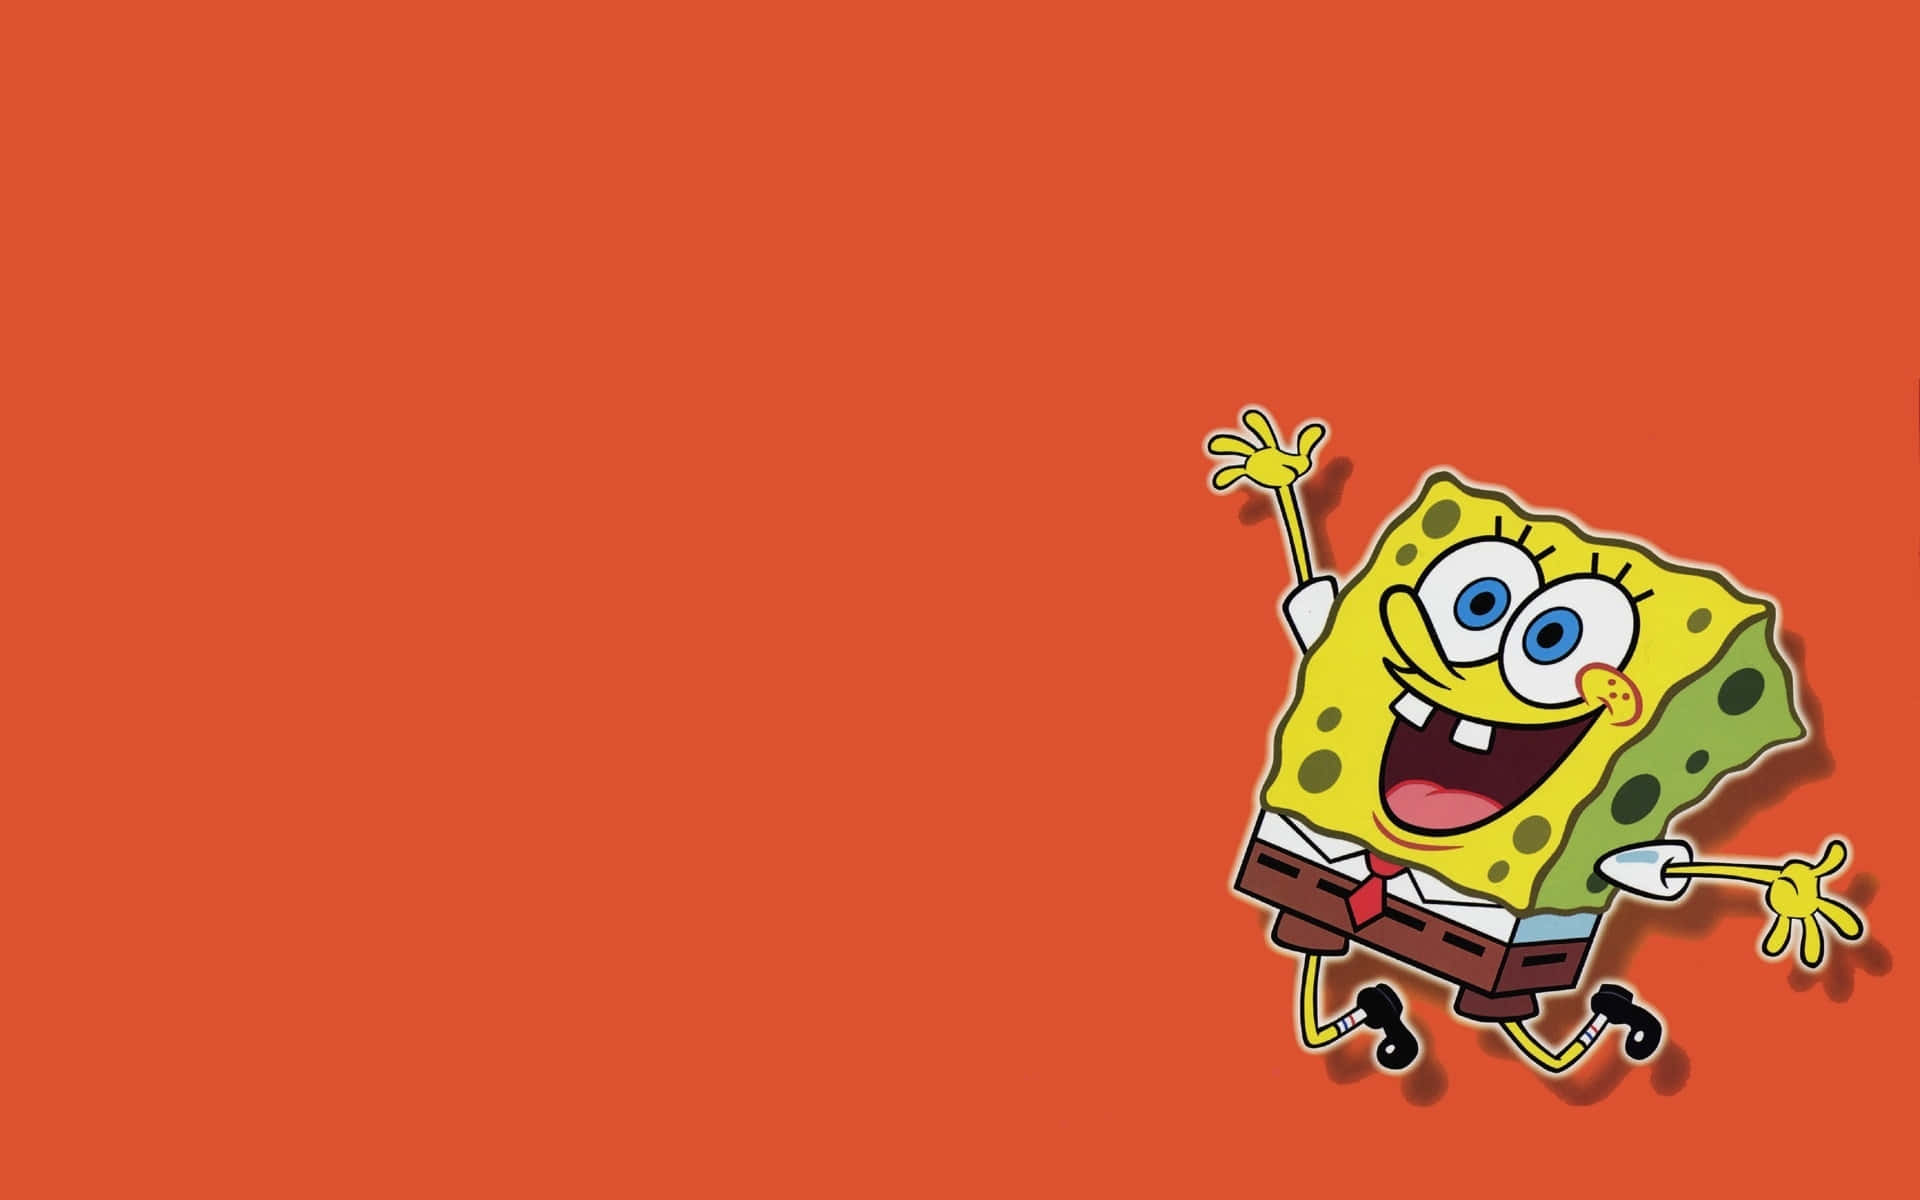 "Spongebob and Patrick Eating Krabby Patties Under the Sea"